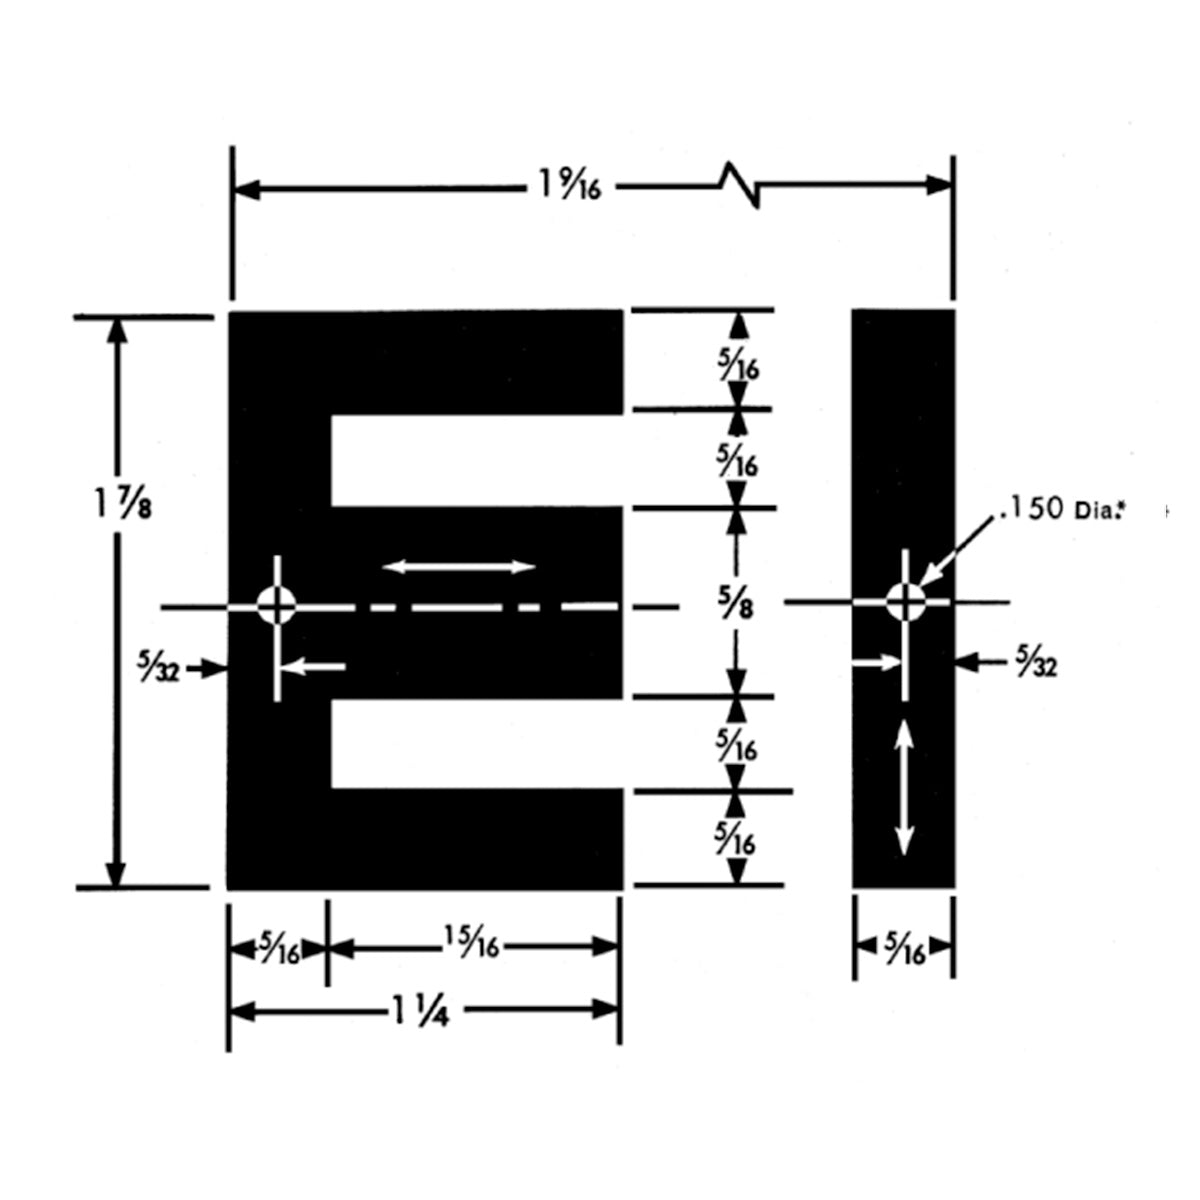 EI 63, M6 29 Gauge Orientated Single Phase Steel Lamination (1 string).